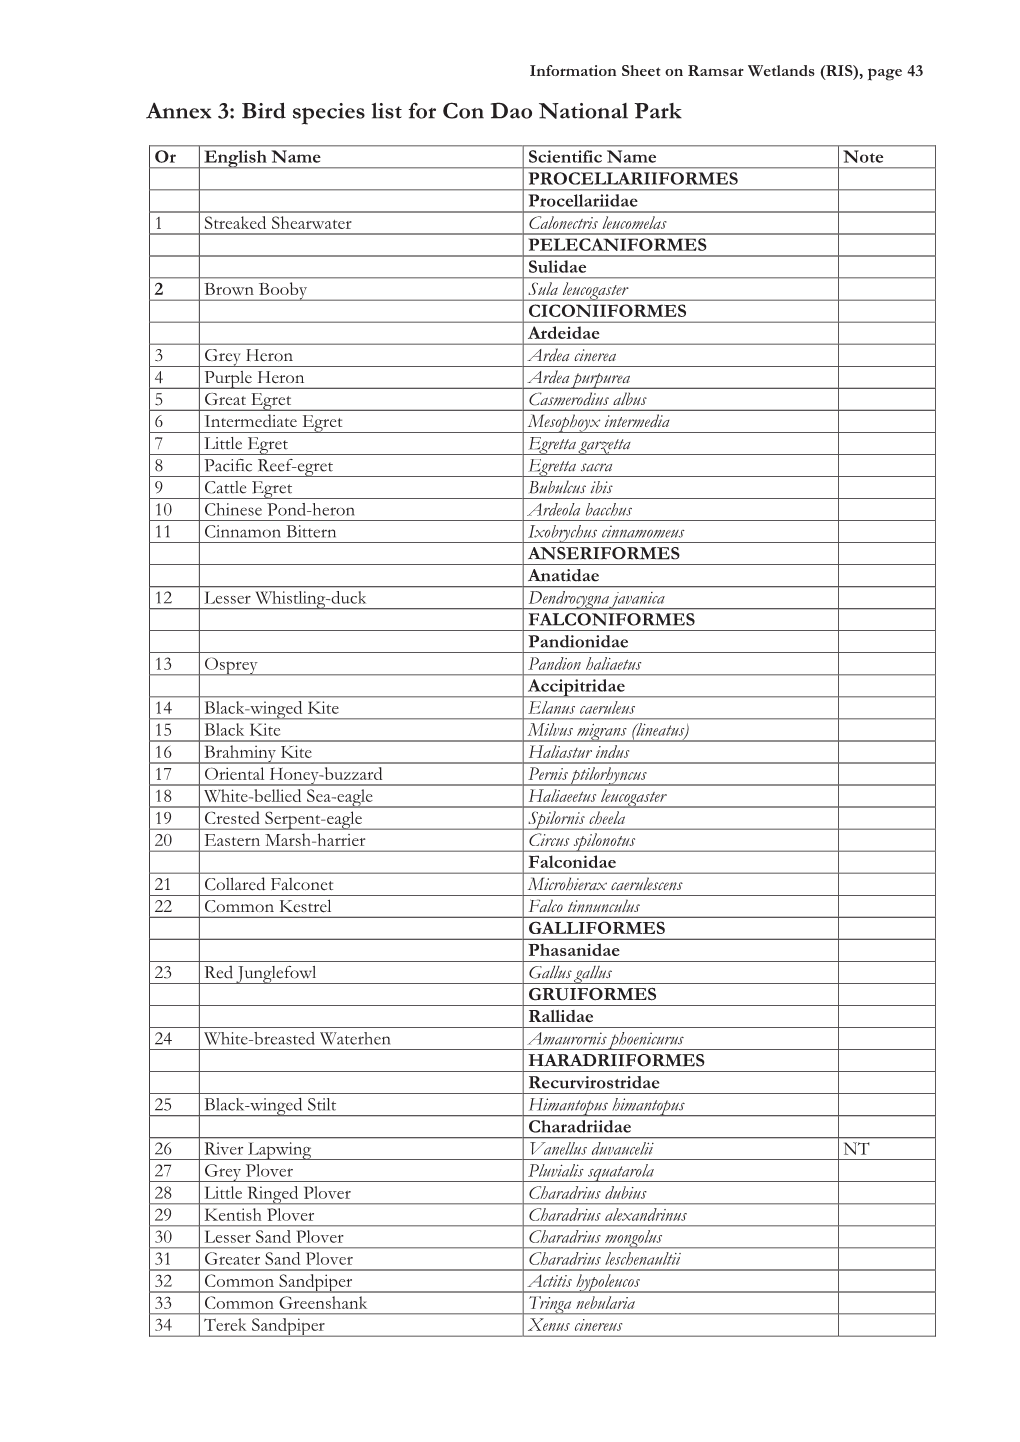 Information Sheet on Ramsar Wetlands (RIS), Page 43 Annex 3: Bird Species List for Con Dao National Park